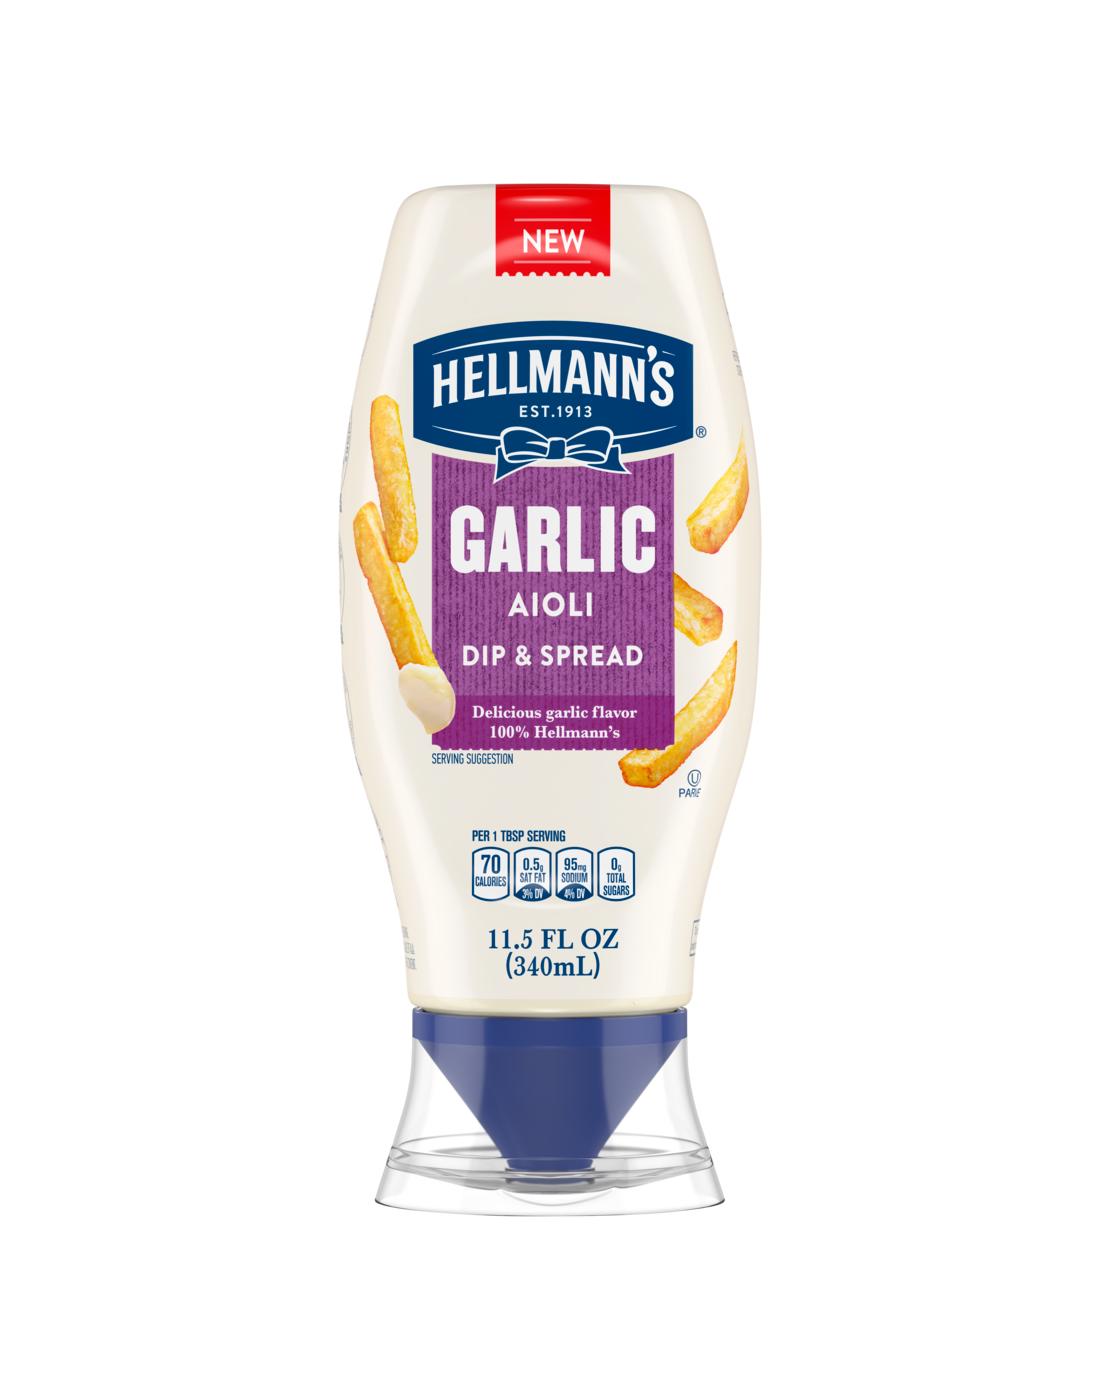 Hellmann's Garlic Aioli Dip & Spread; image 1 of 2